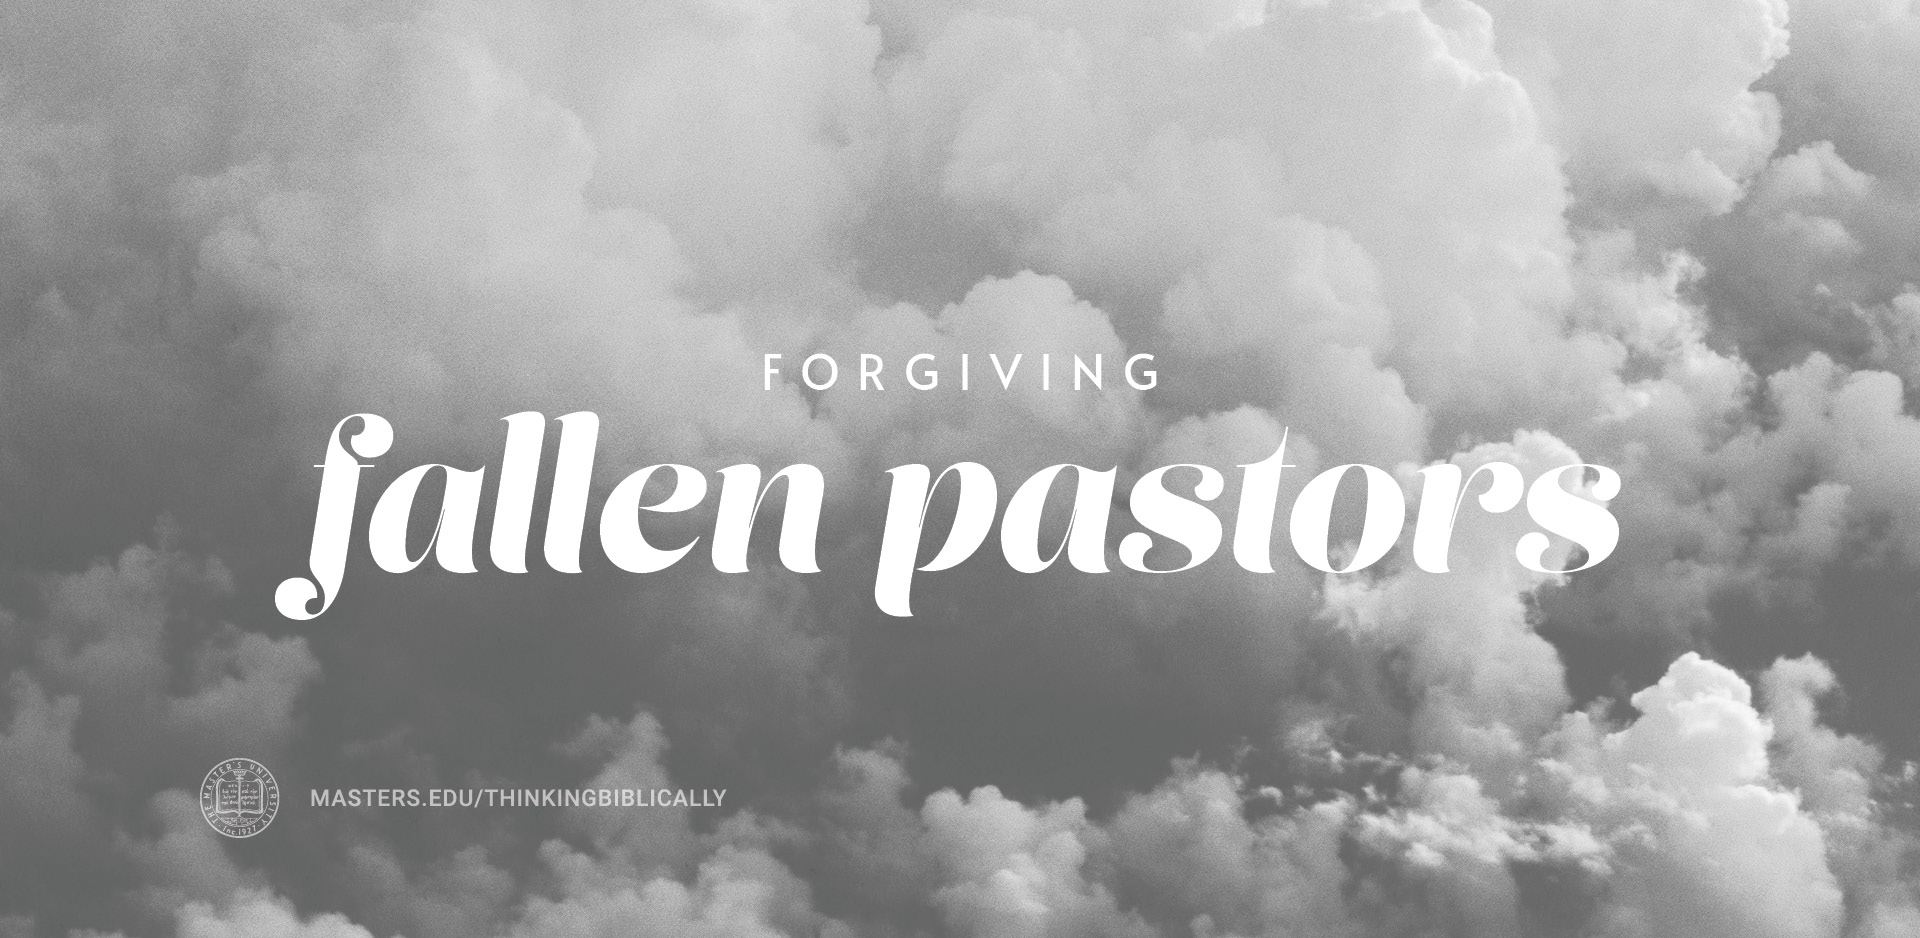 Forgiving Fallen Pastors Featured Image